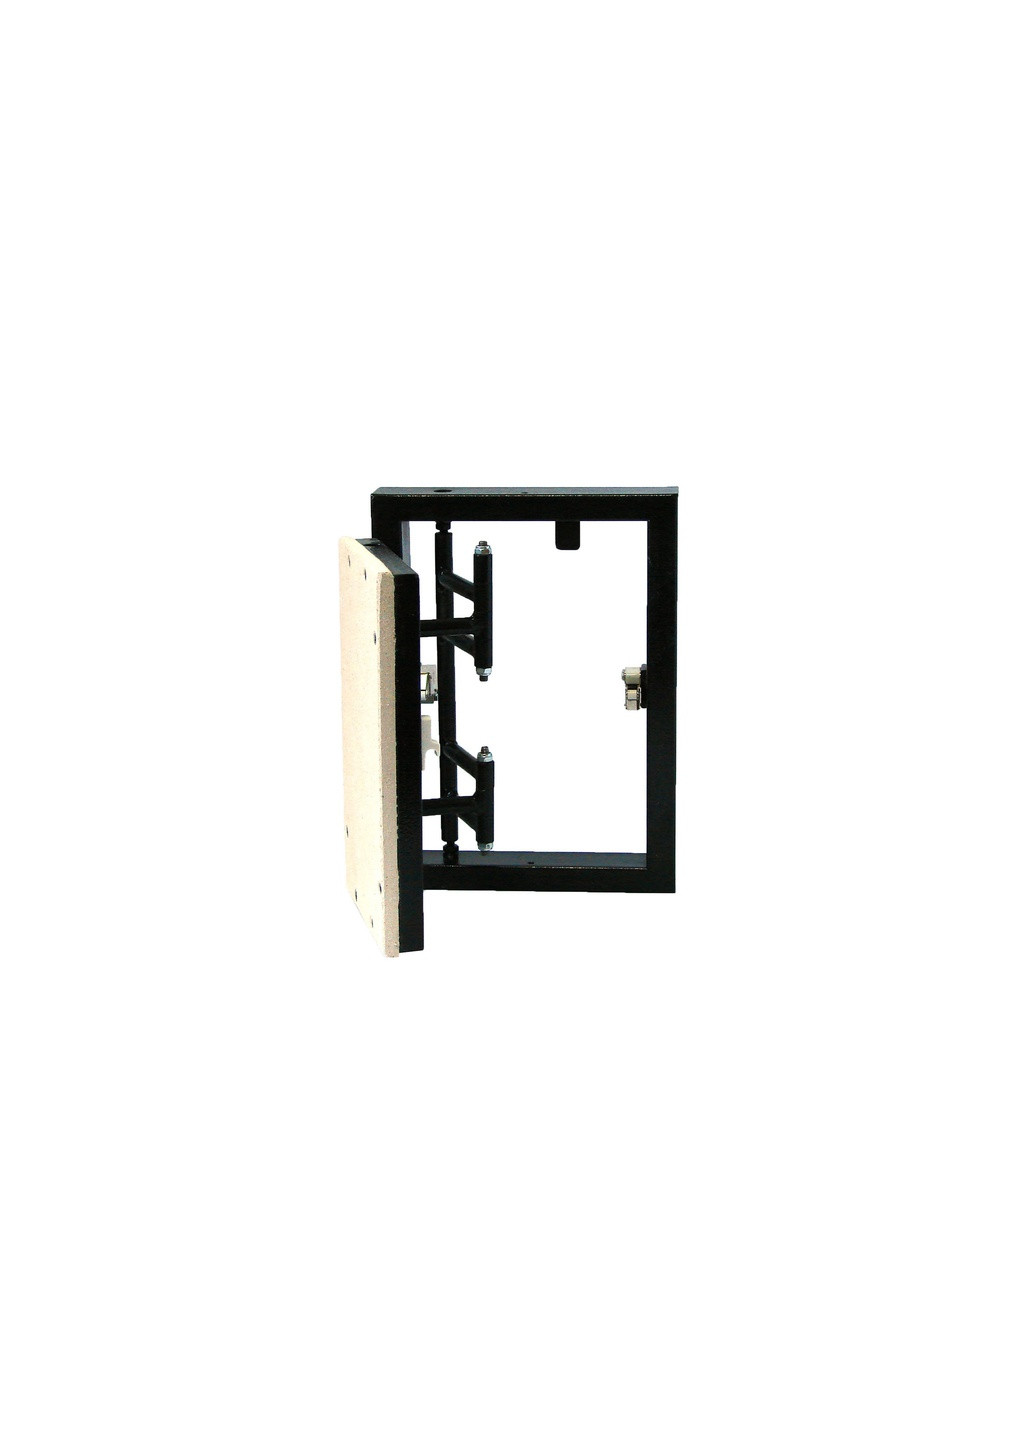 Ревизионный люк скрытого монтажа под плитку нажимного типа 250x300 ревизионная дверца для плитки (1116) S-Dom (264208769)